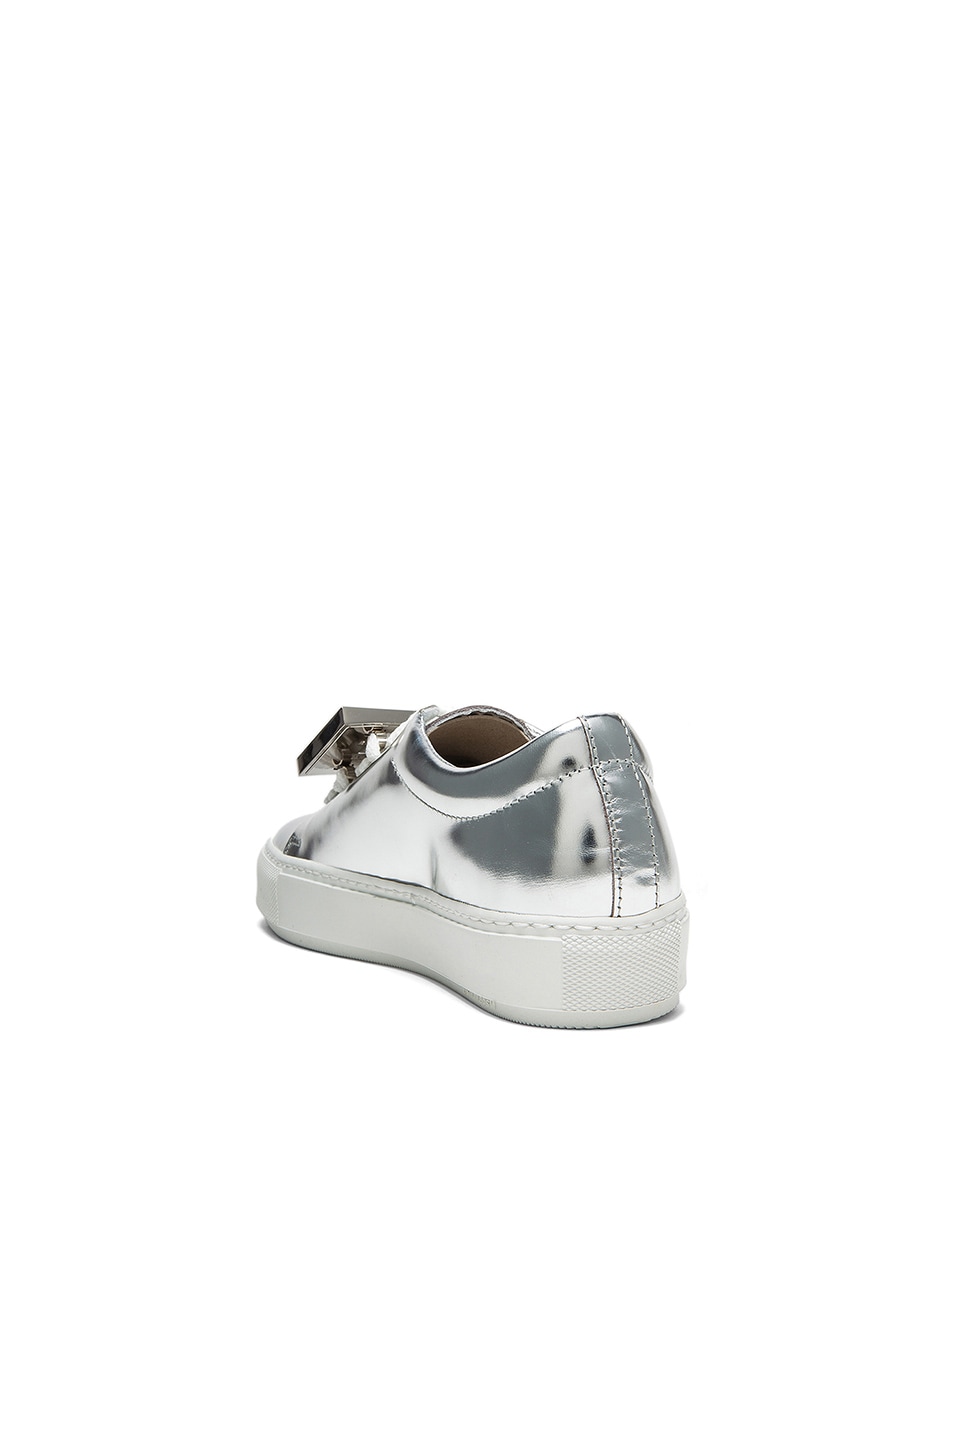 Acne Studios Adriana Metallic Leather Sneakers in Silver | FWRD